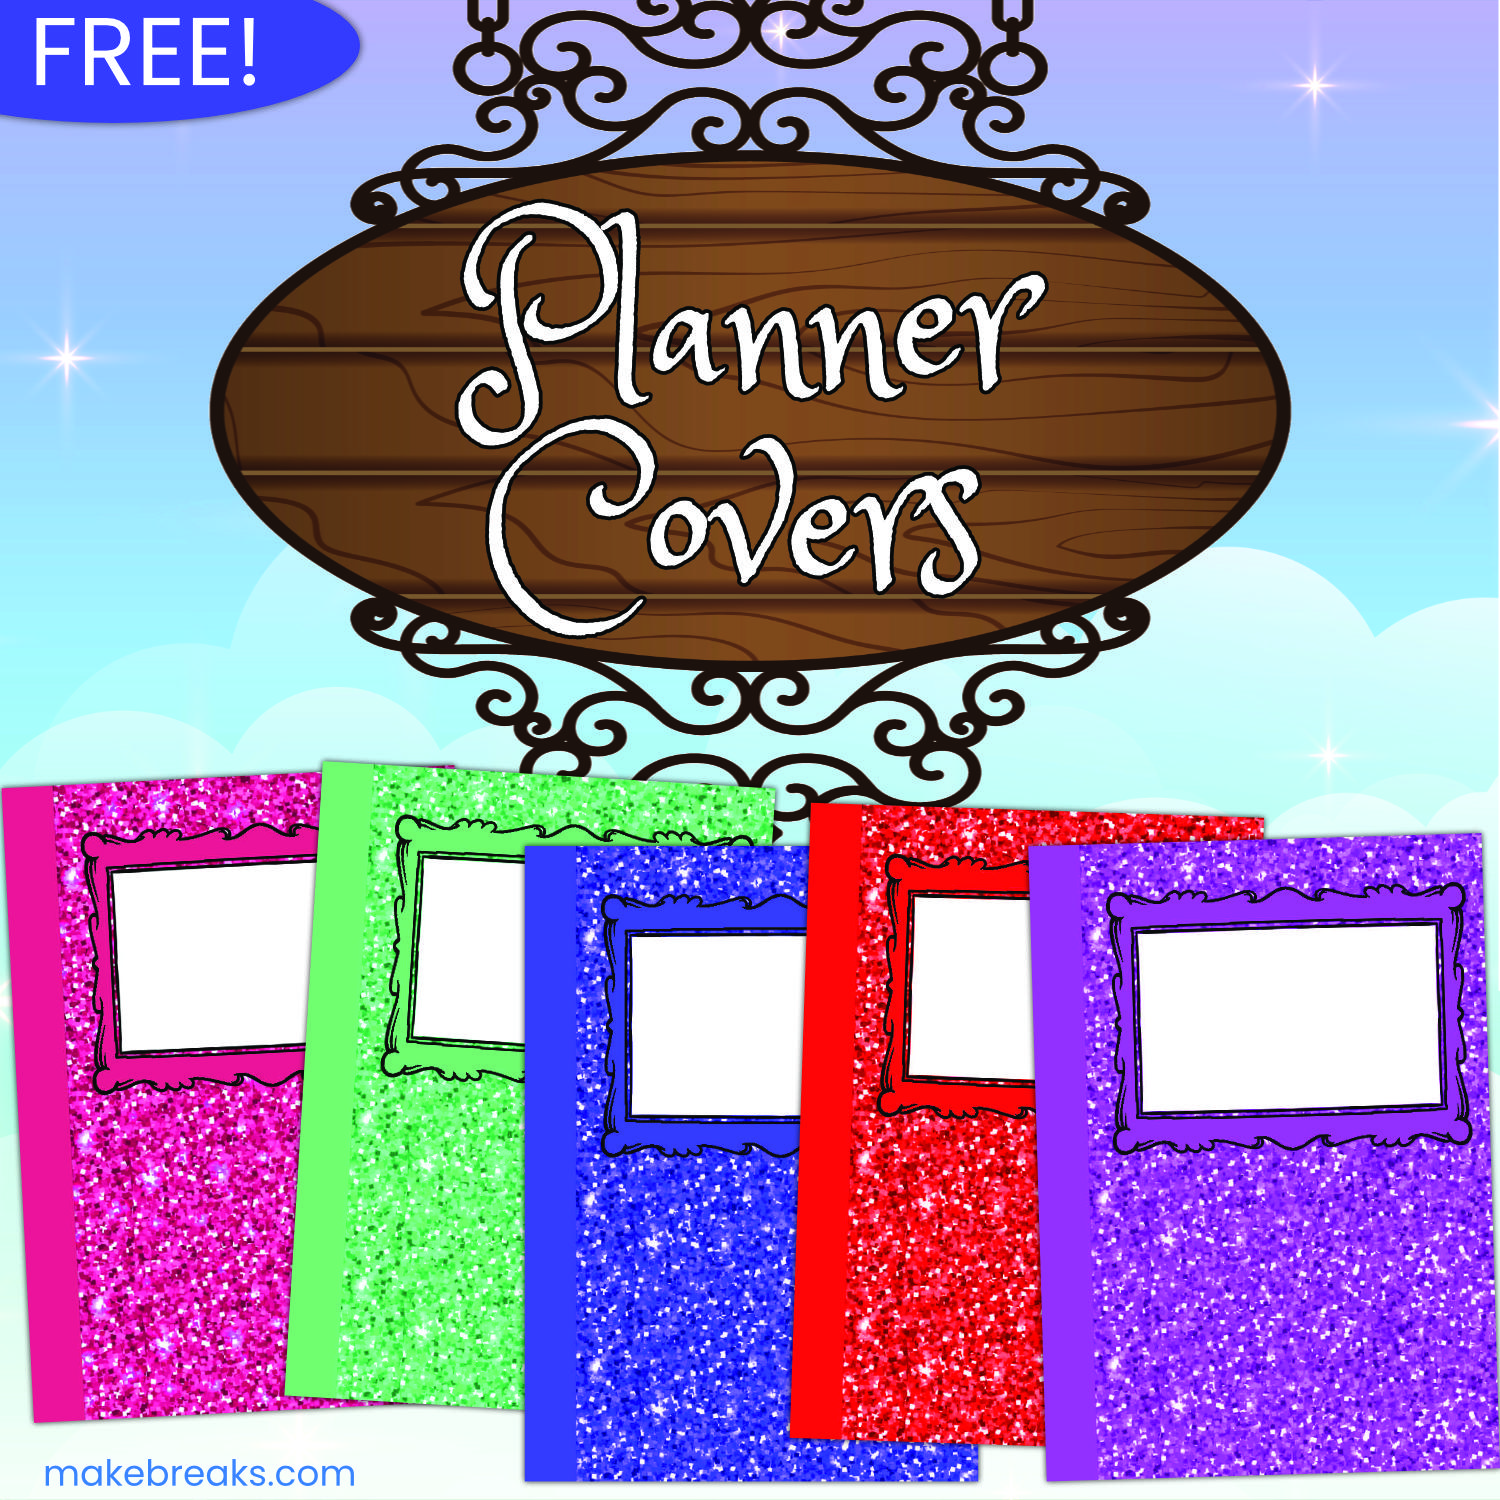 Free Glitter Digital Planner Covers